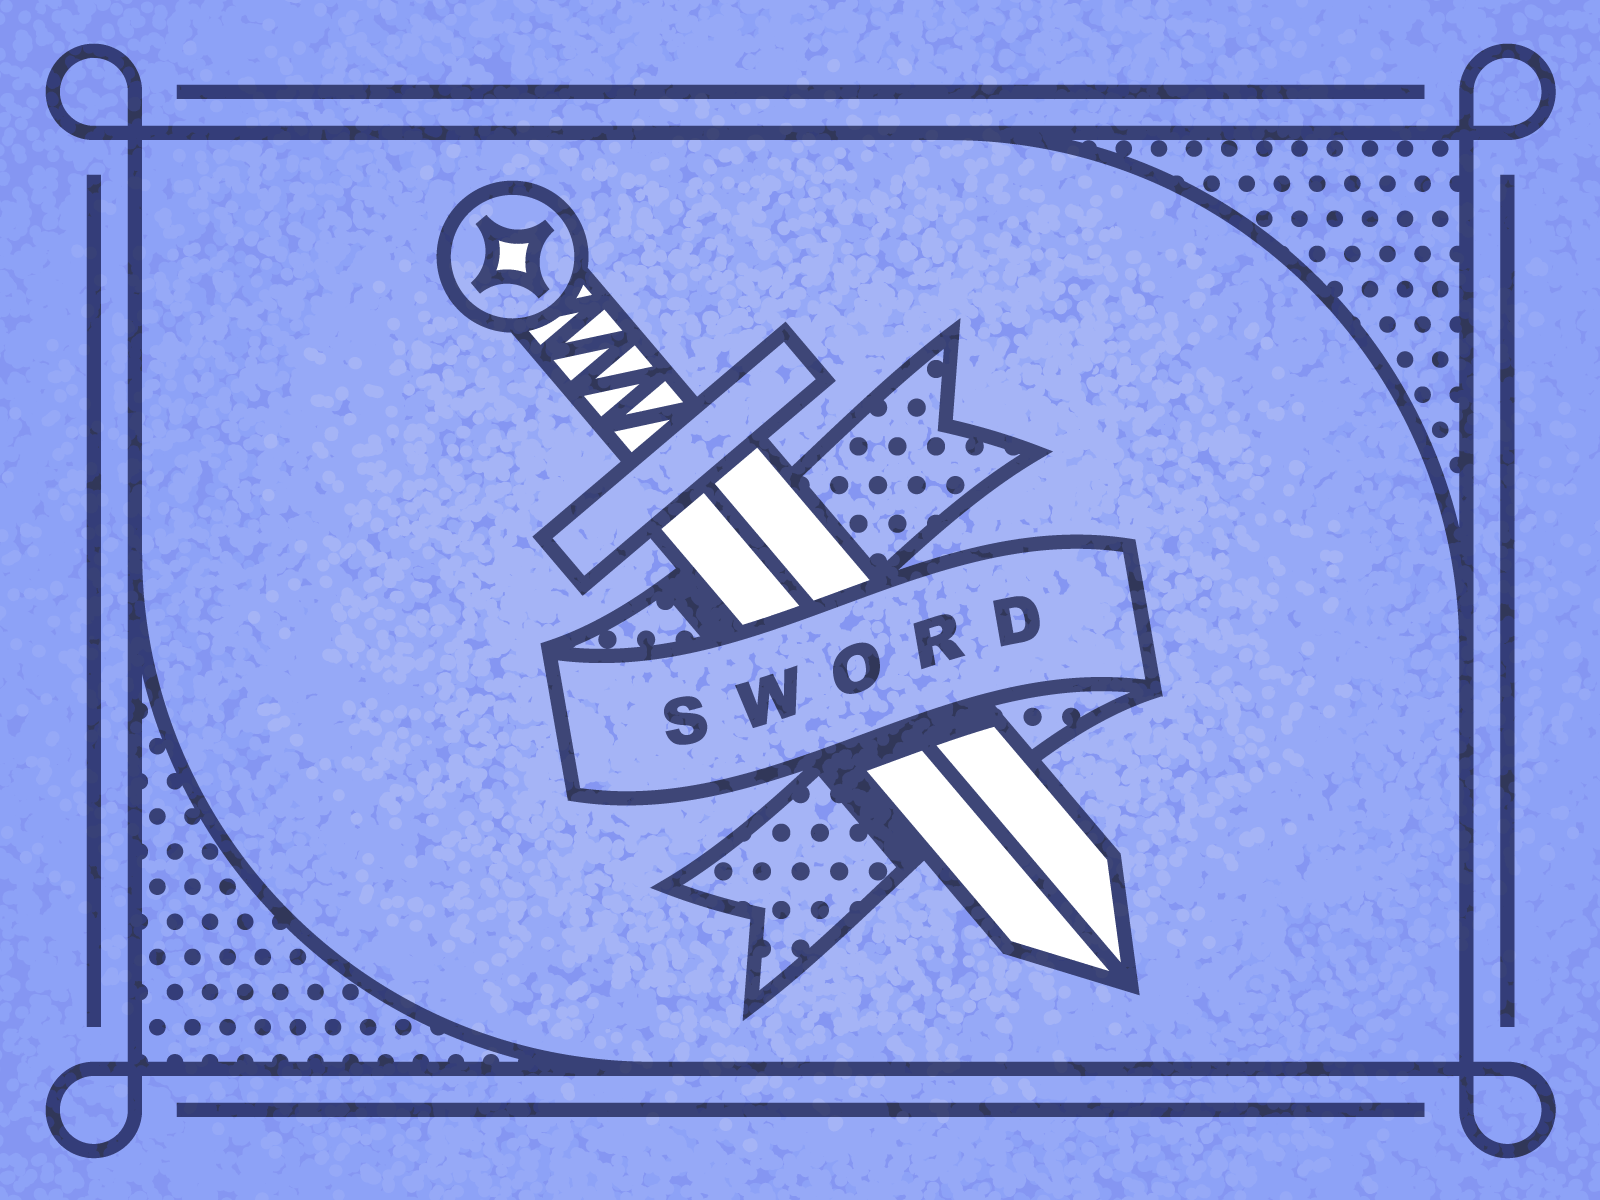 Sword design fun goofy grunge illustration vector